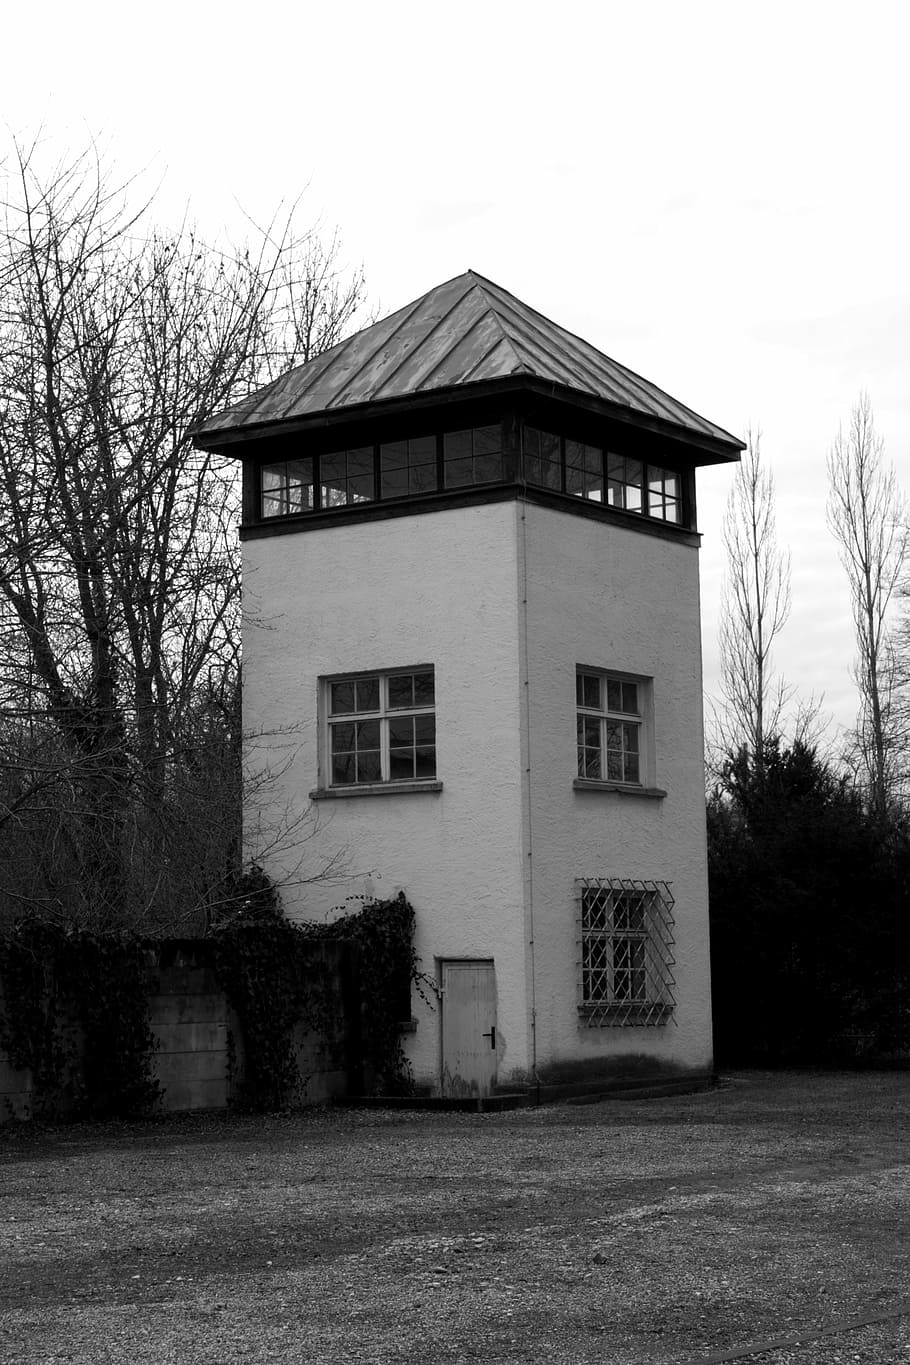 konzentrationslager, dachau, torre de vigilancia, era hitleriana, crimen, kz, arquitectura, estructura construida, exterior del edificio, edificio